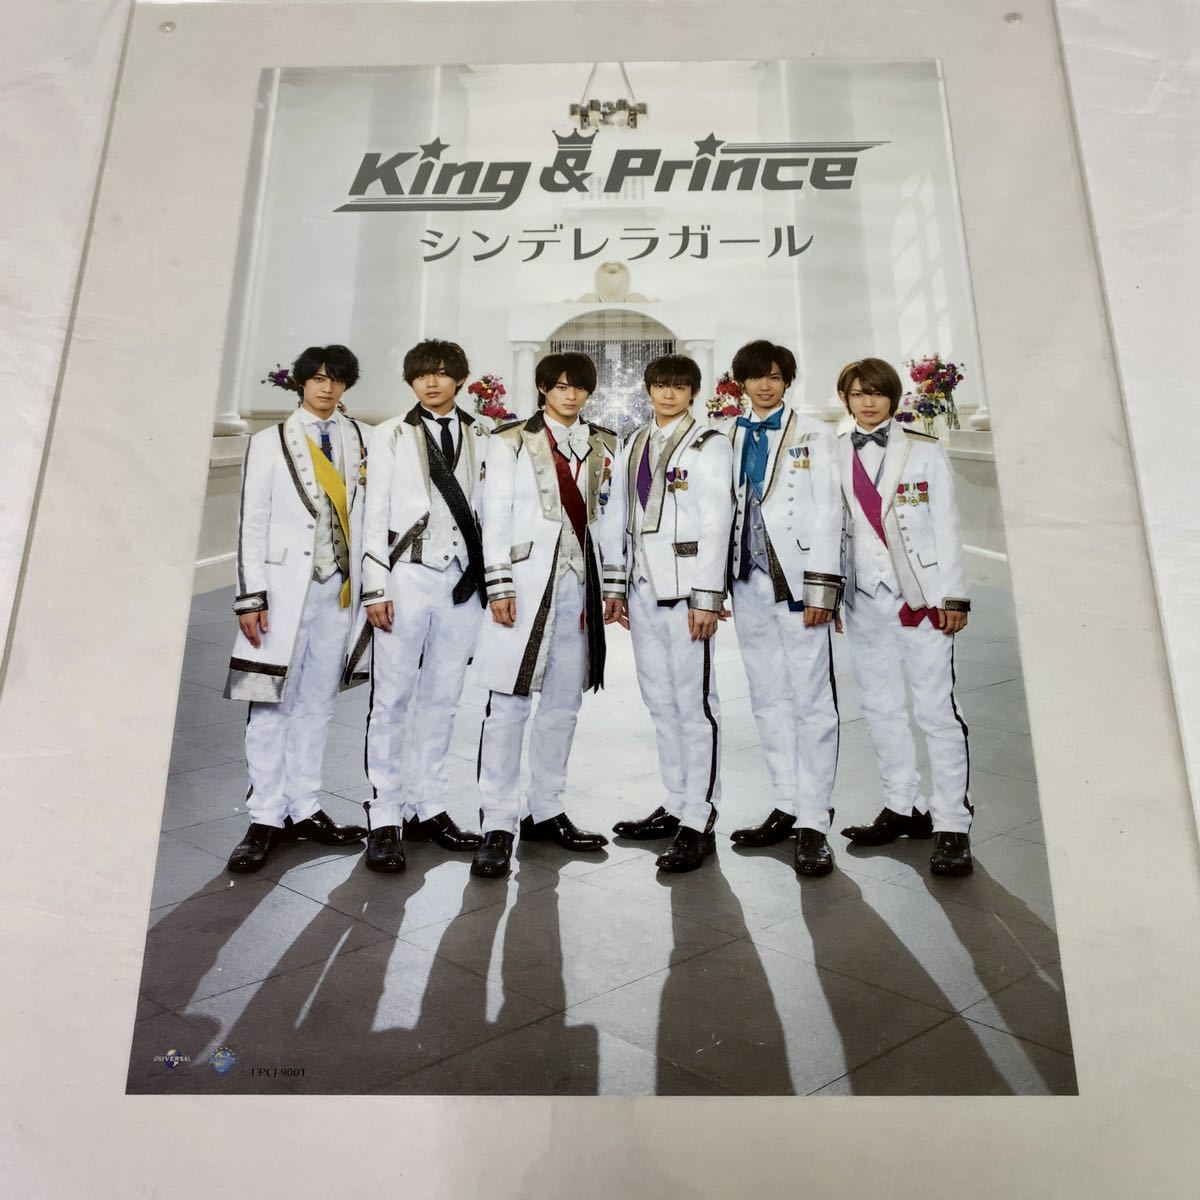 King & Prince シンデレラガール 初回限定盤A/B/通常盤 先着購入者特典 